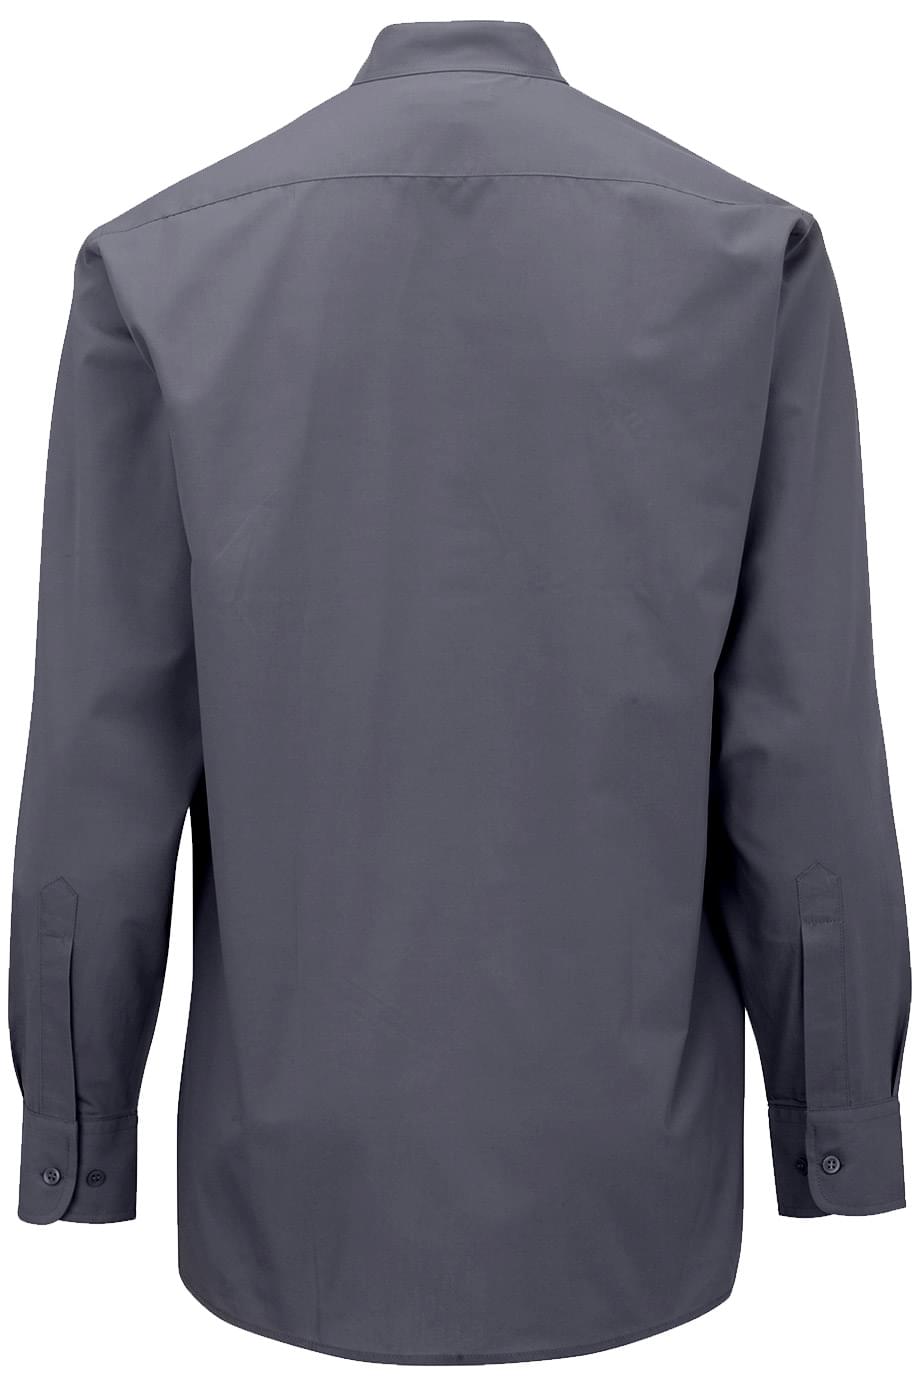 BANDED COLLAR BROADCLOTH SHIRT | Edwards Garment